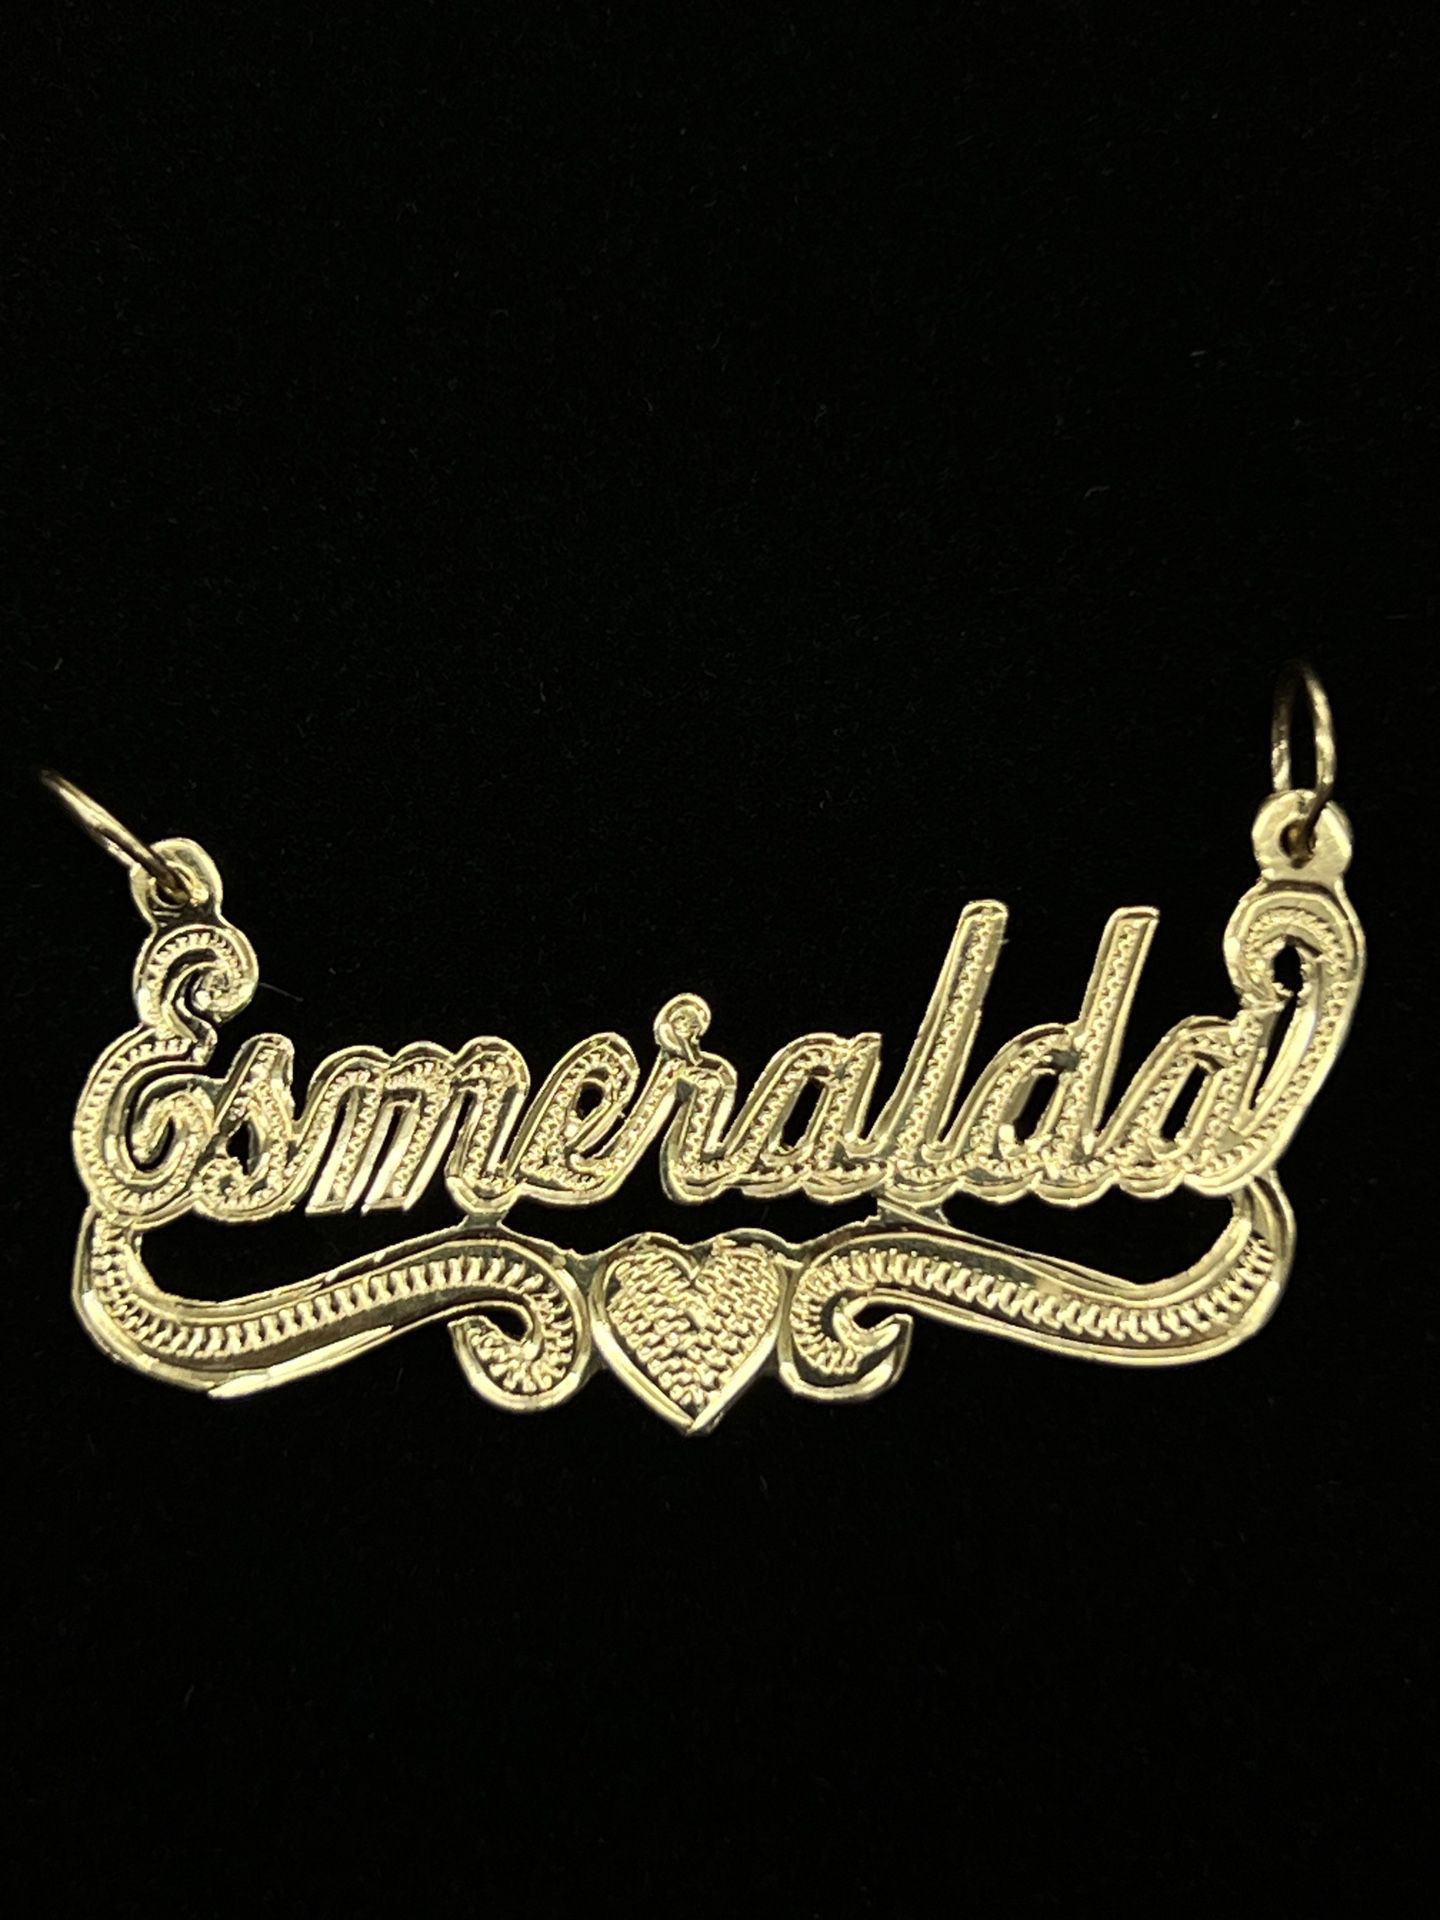 $250 Esmeralda Yellow Gold Name Plate